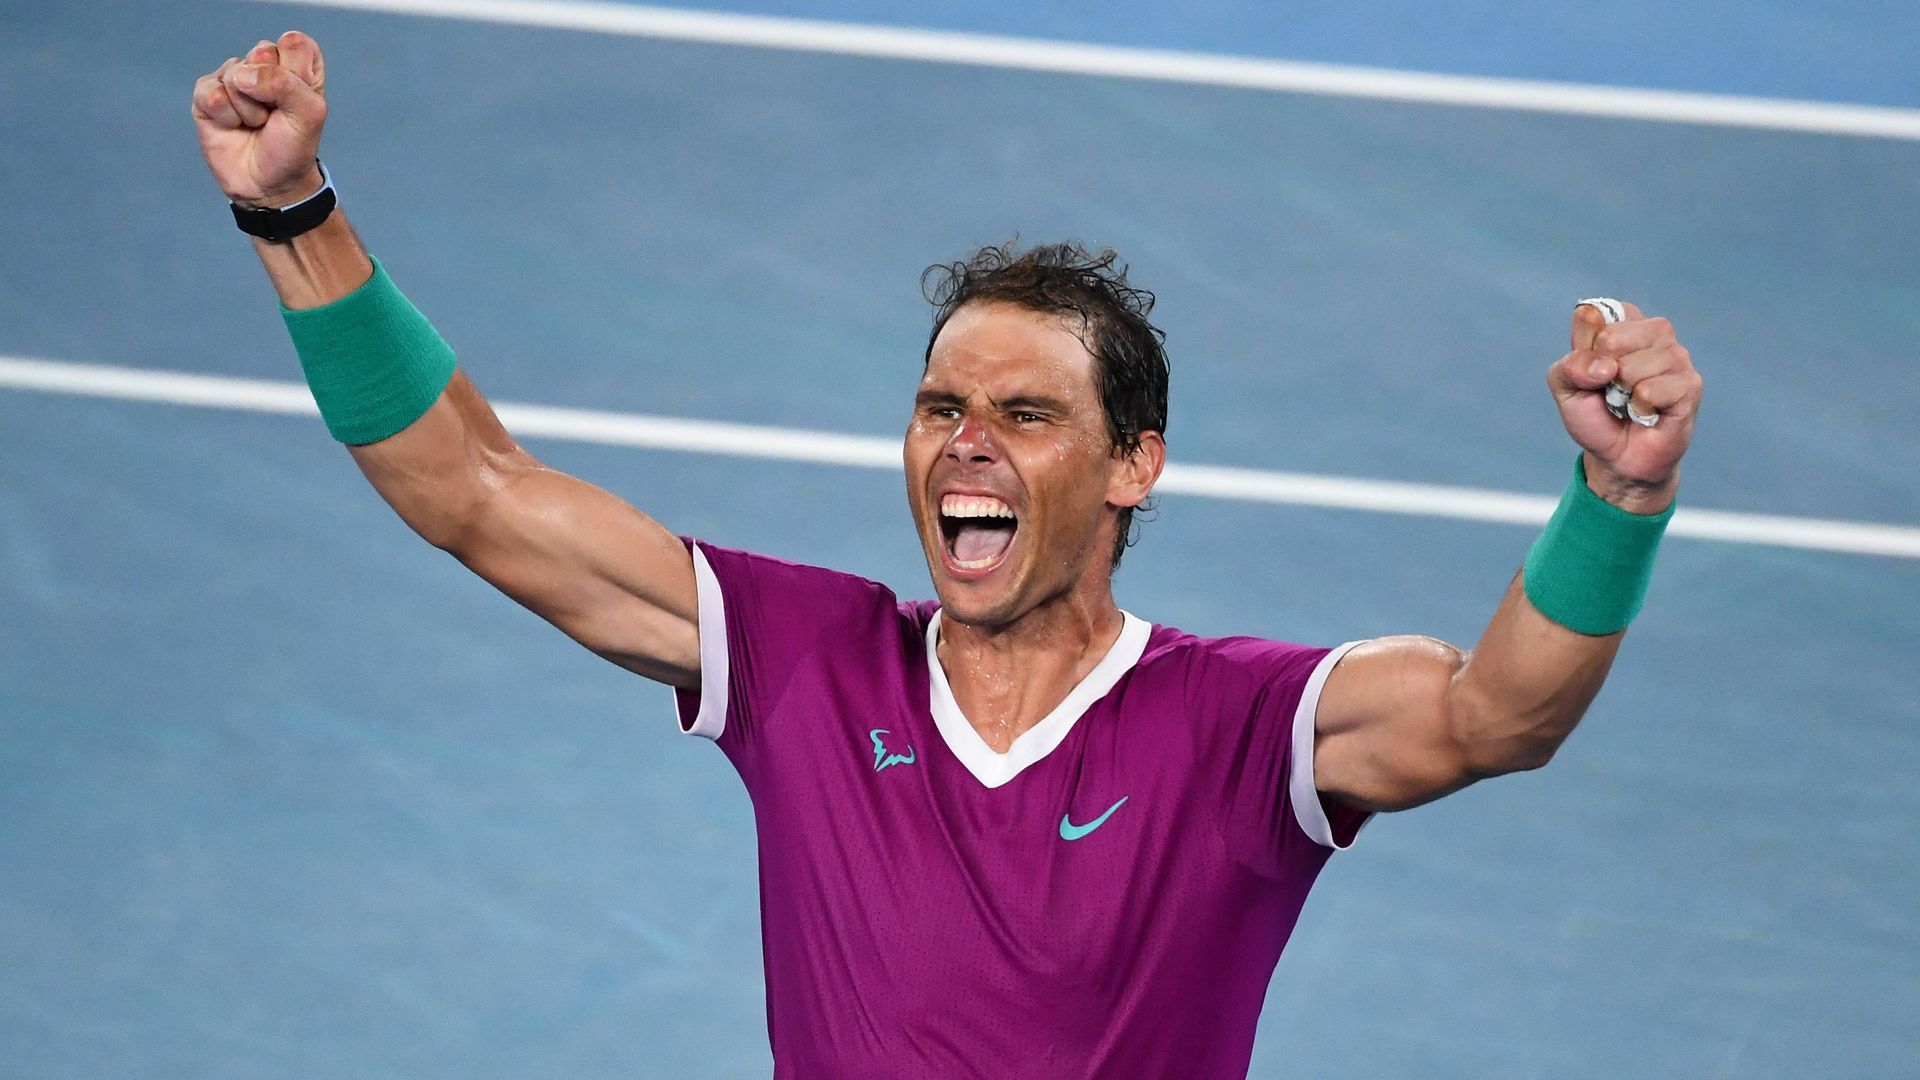 Rafael Nadal reacts after winning against Daniil Medvedev at the Australian Open